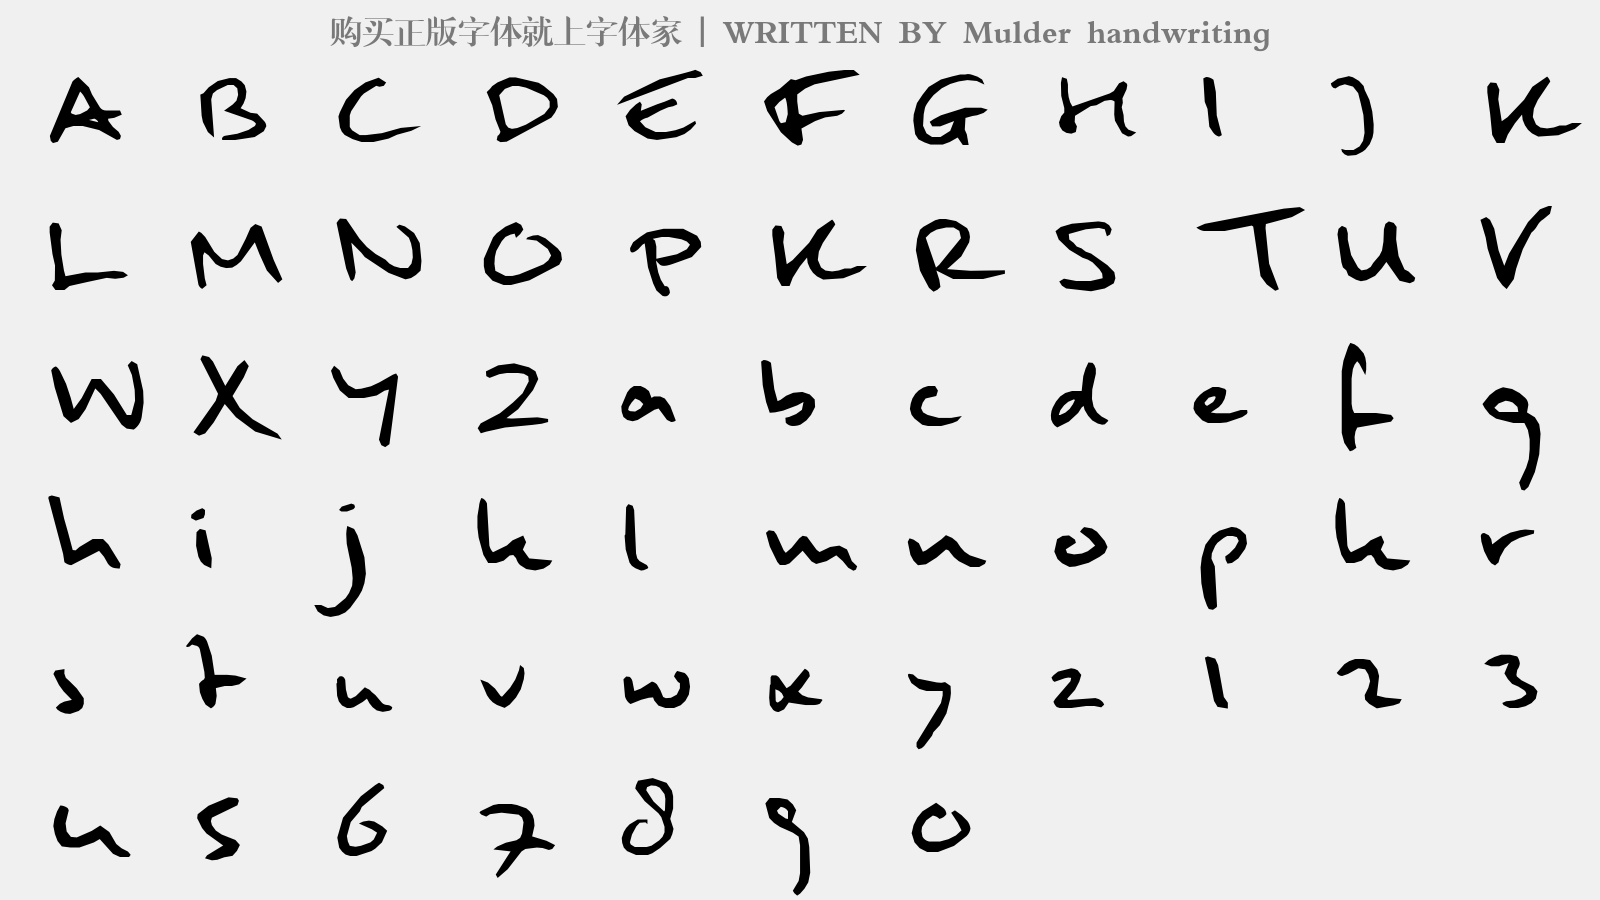 Mulder handwriting - 大写字母/小写字母/数字